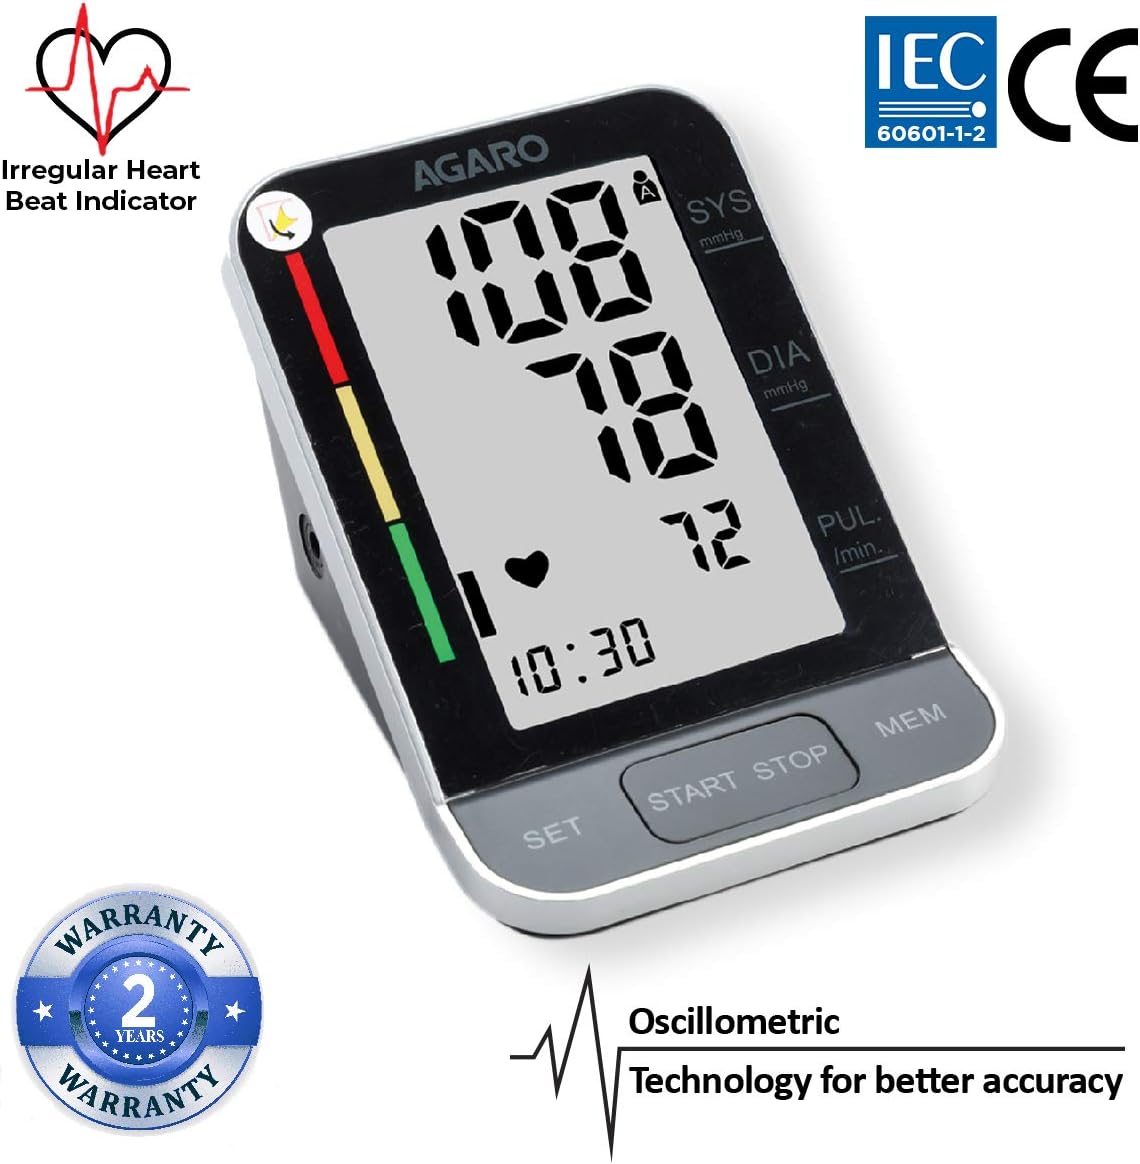 AGARO Automatic Digital Blood Pressure Monitor, BP-801, 240 Memory, Talk function, Batteries Included